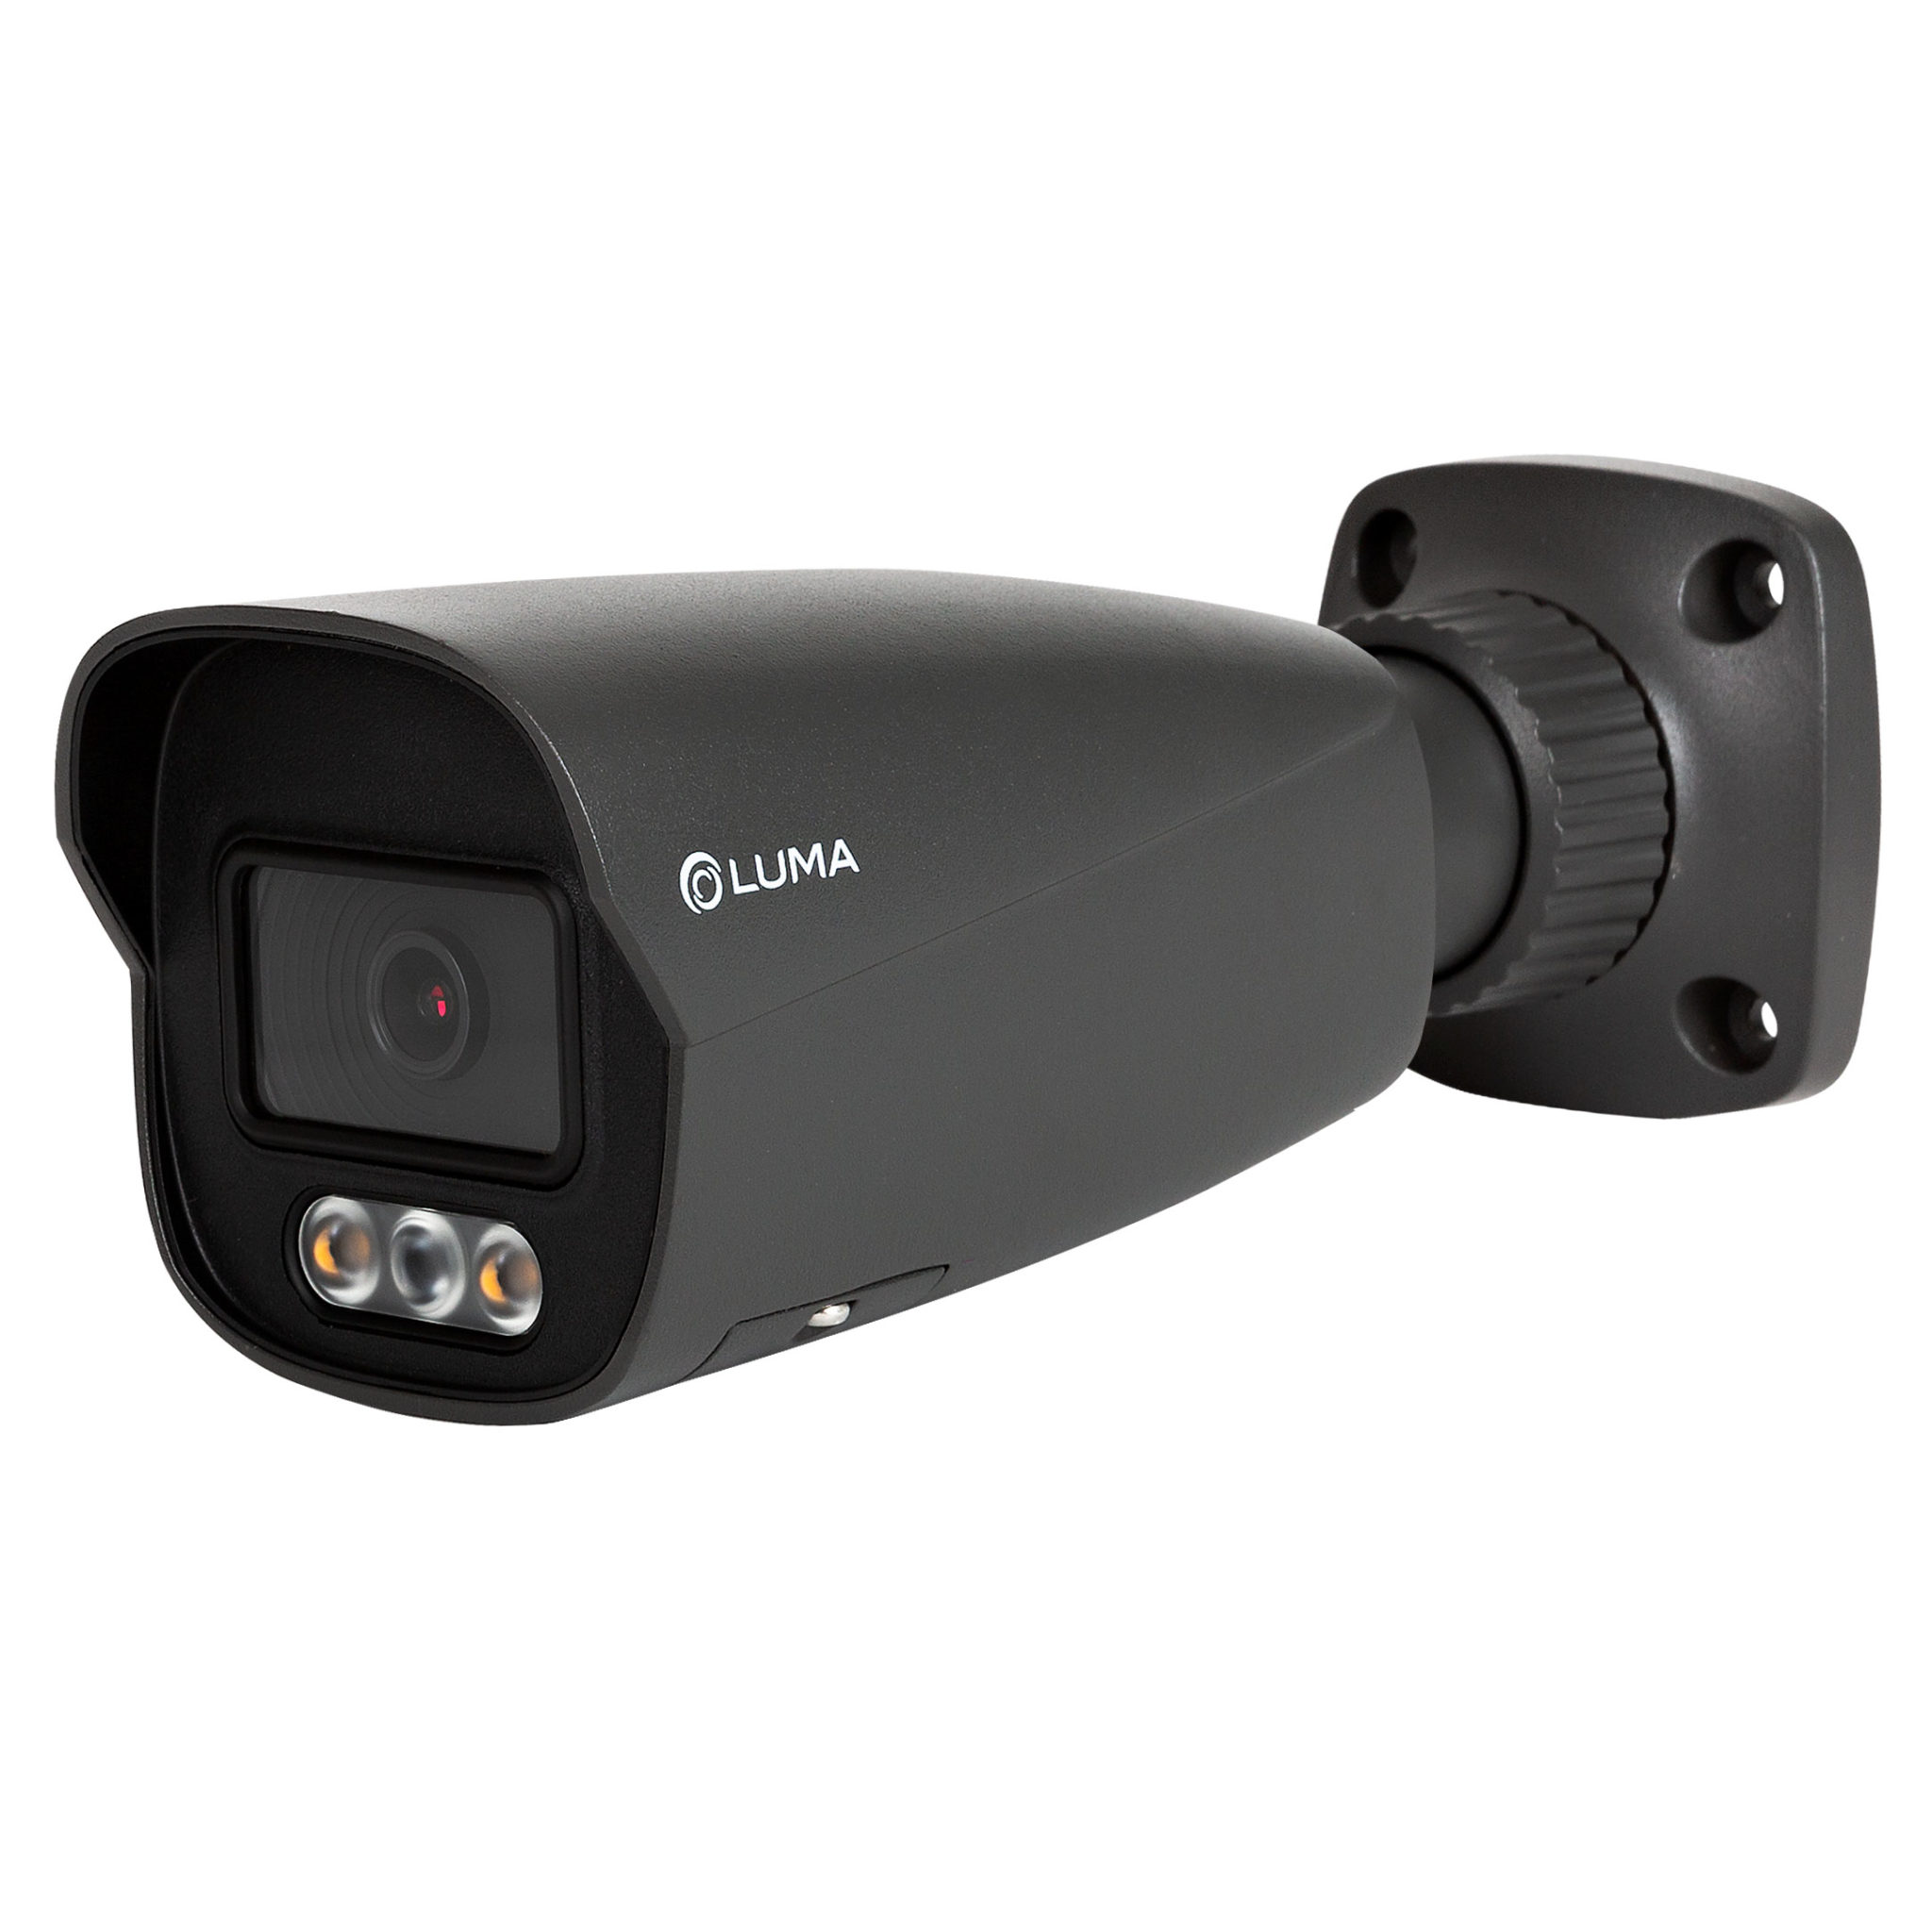 Snap One Introduces Luma x20 Surveillance Products Line